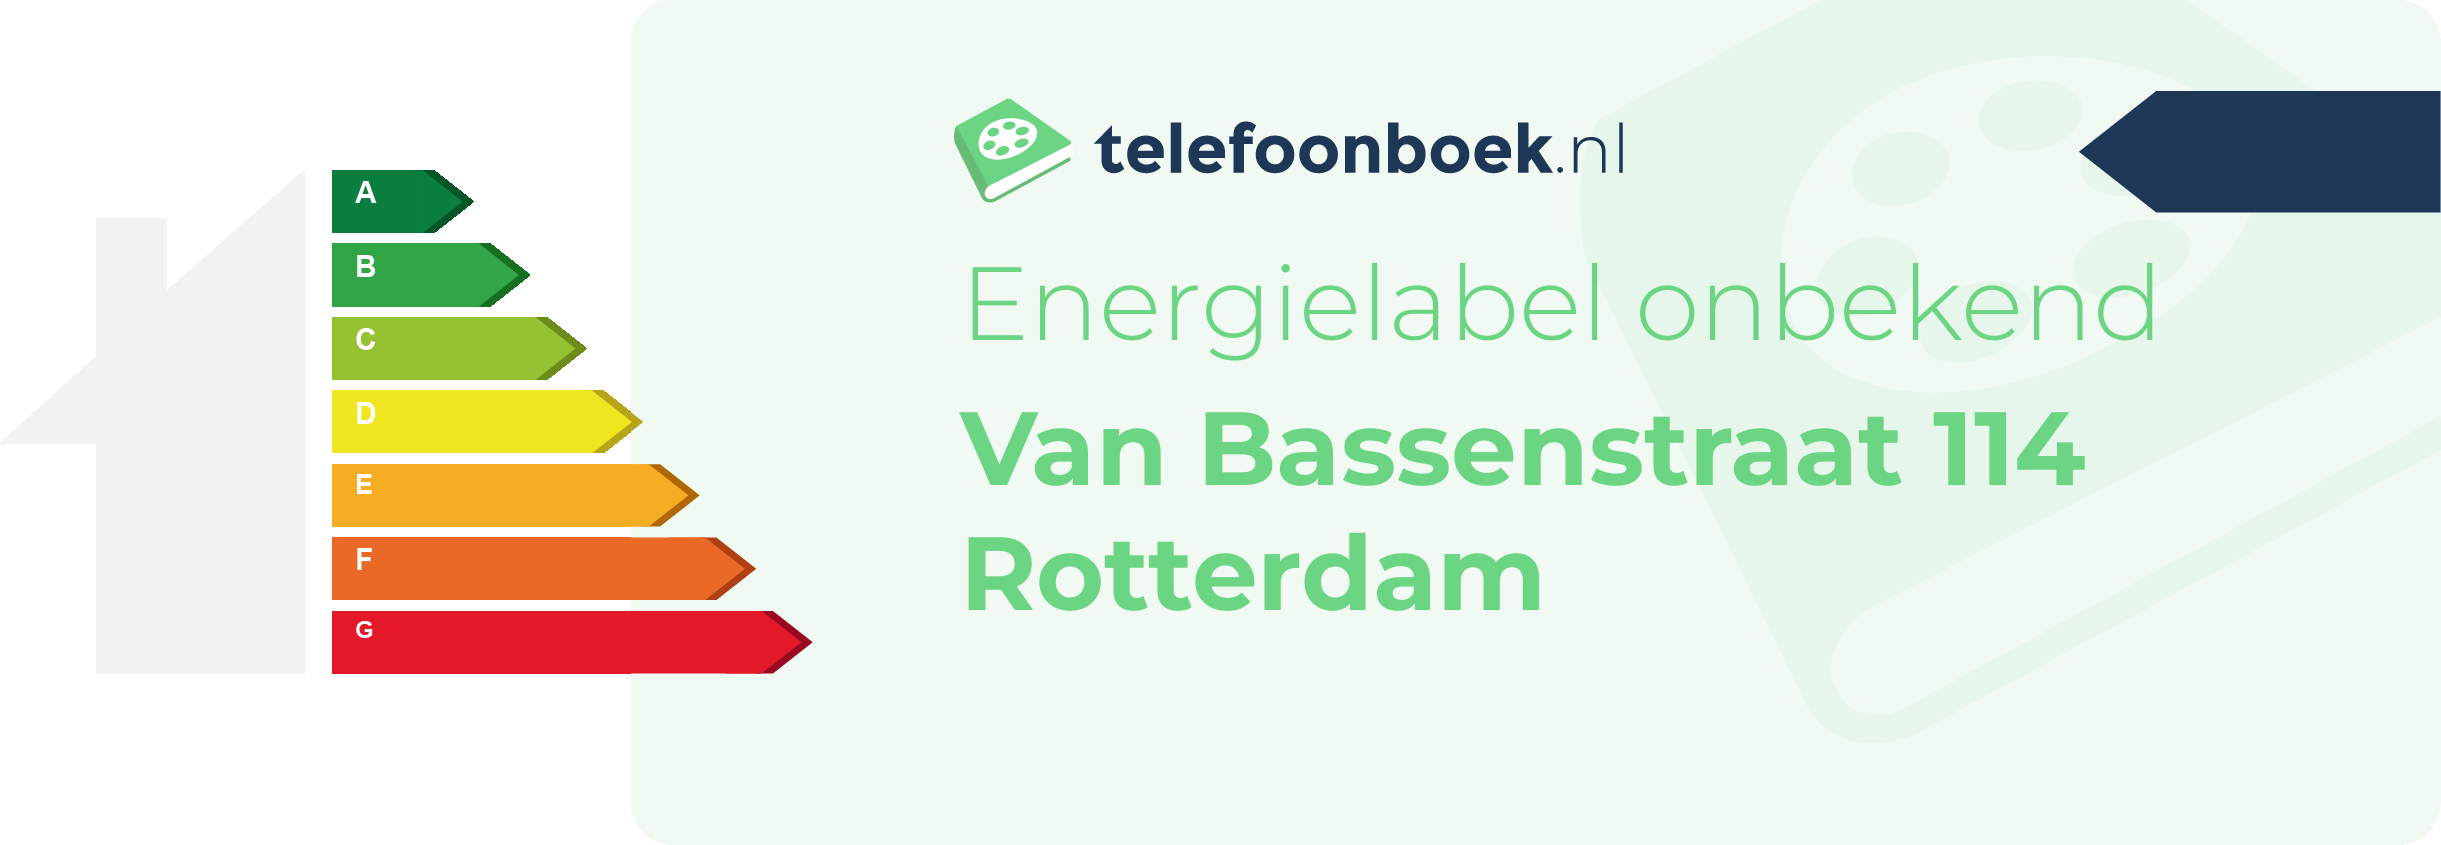 Energielabel Van Bassenstraat 114 Rotterdam